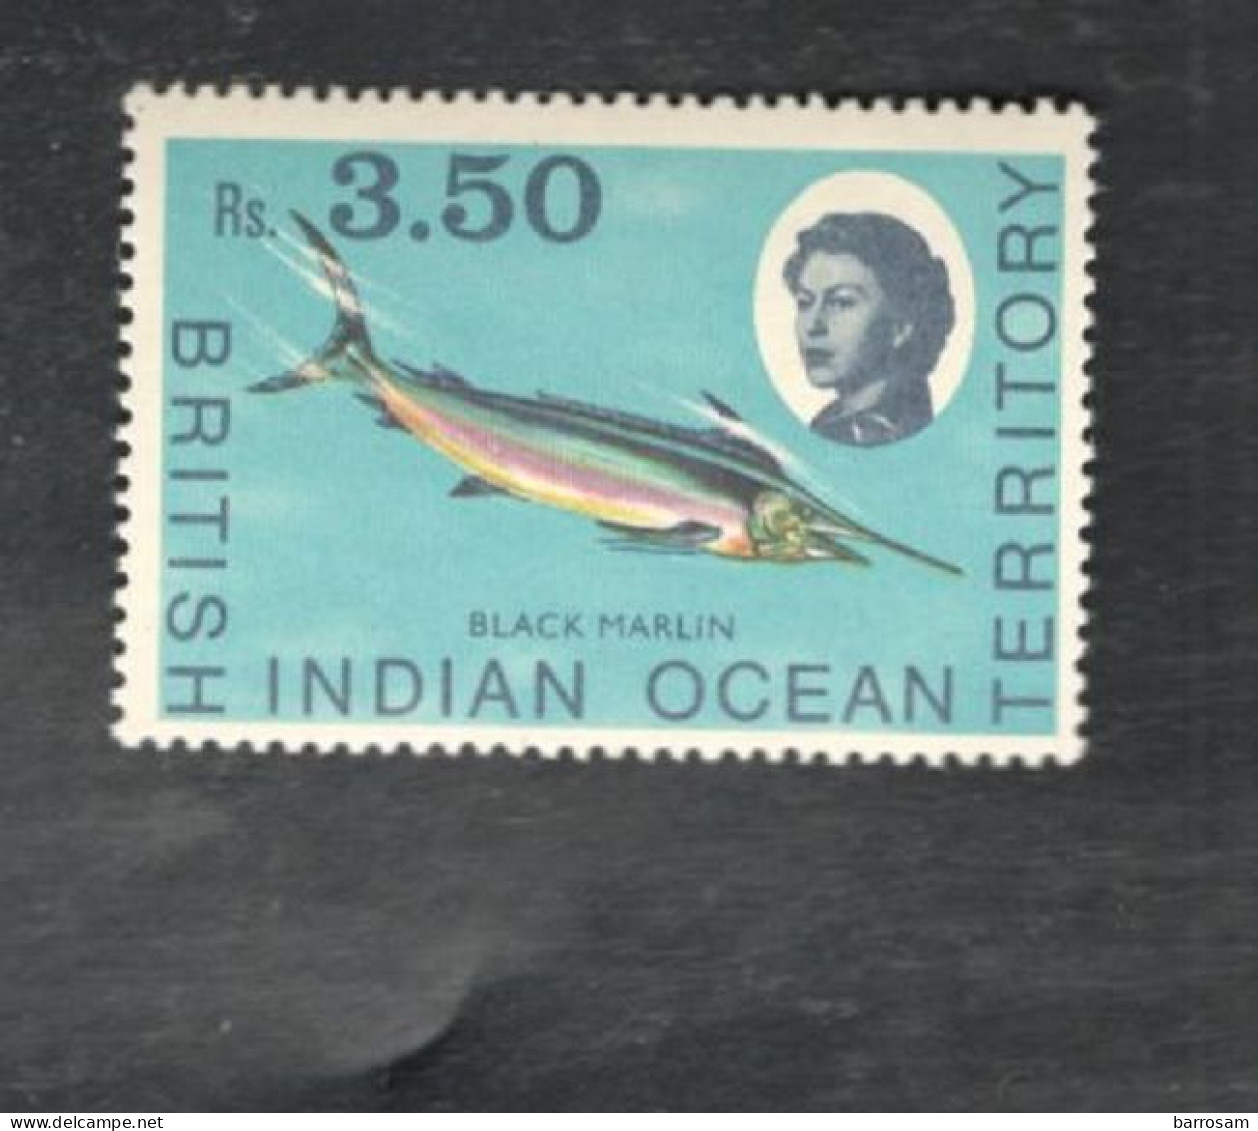 BRITISH INDIAN OCEAN TERRITORY....1968:Michel 28mnh** - Britisches Territorium Im Indischen Ozean